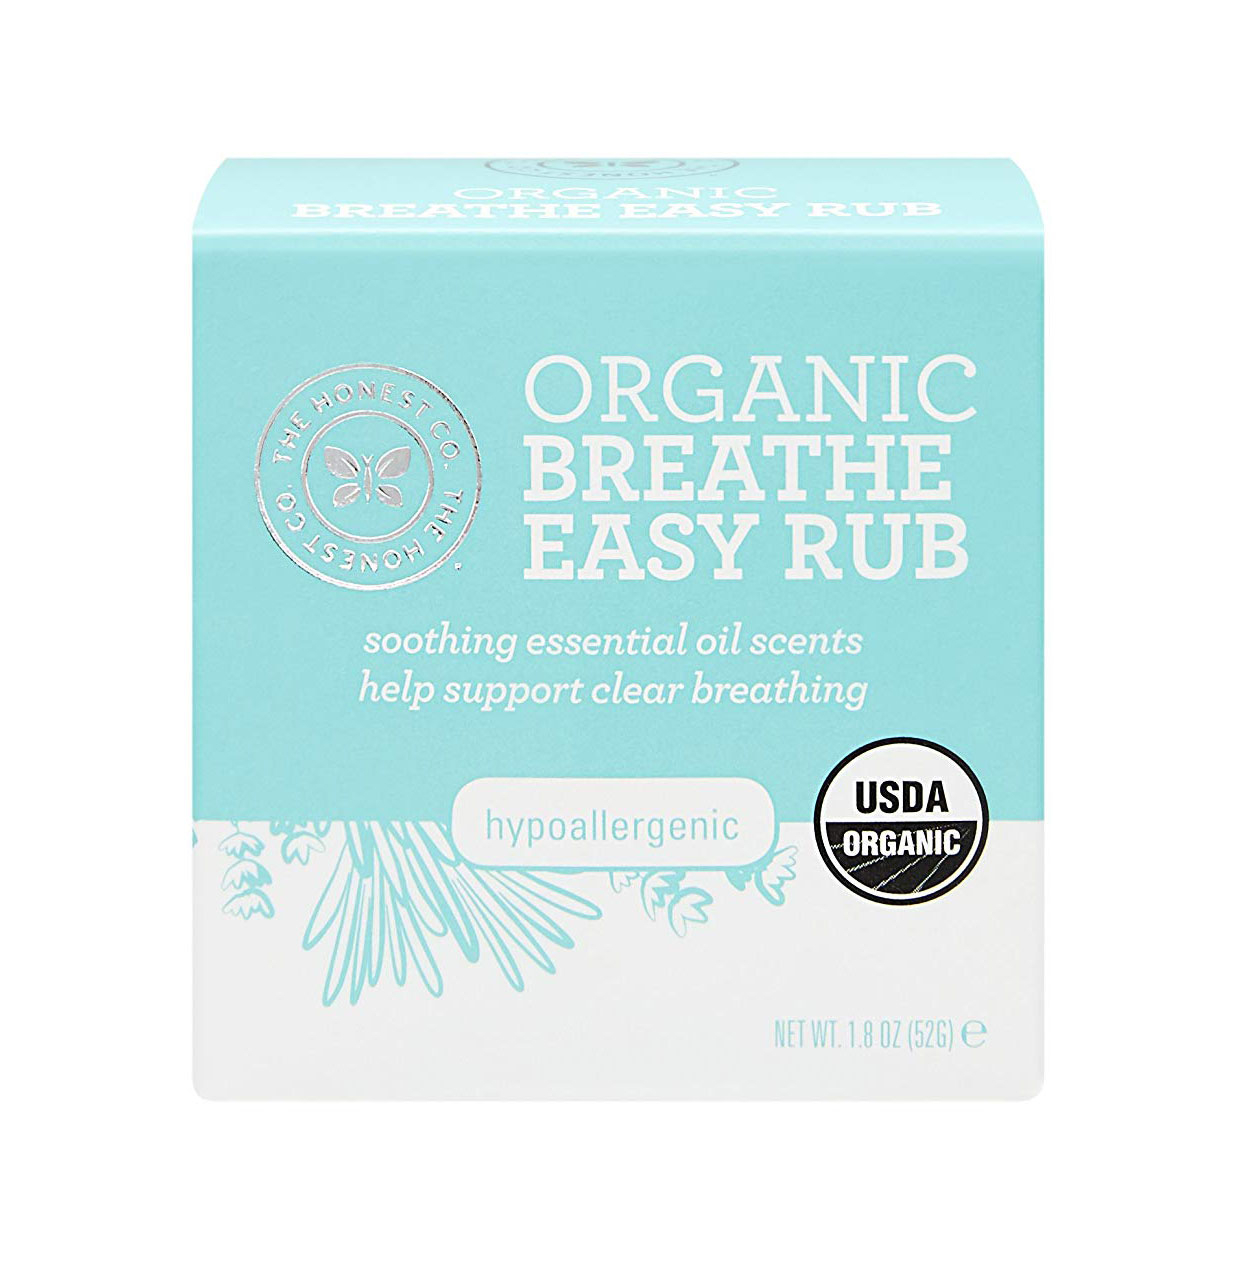 Kem chống cảm cho bé The Honest Organic Breathe